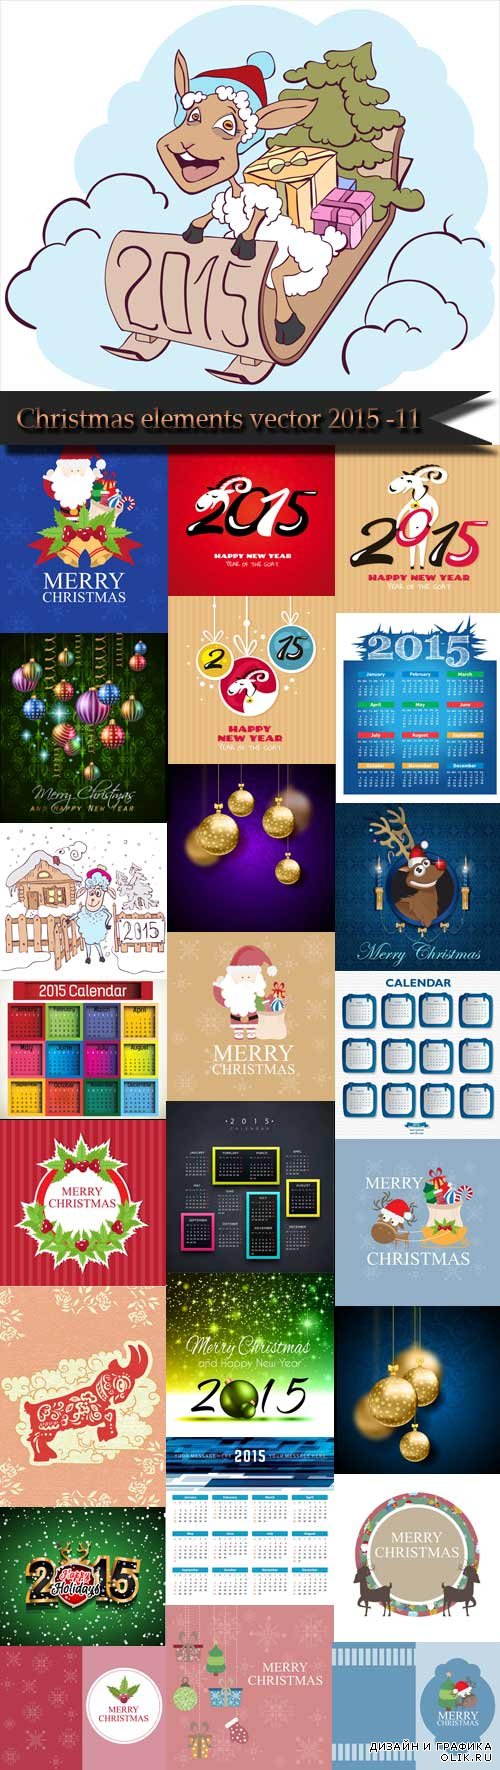 Christmas elements vector 2015 -11